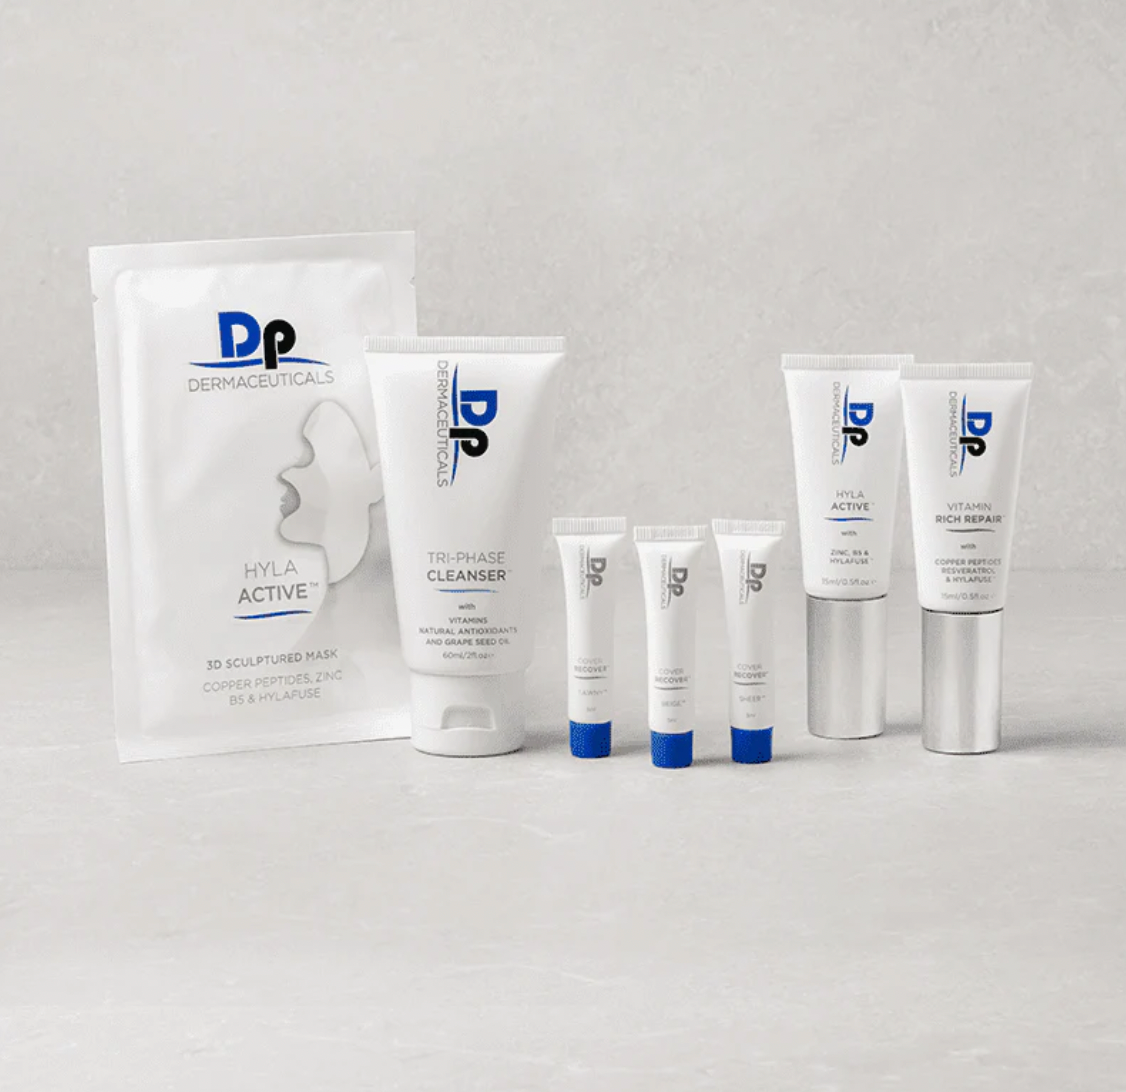 Dp Dermaceuticals Post Treatment Starter Kit